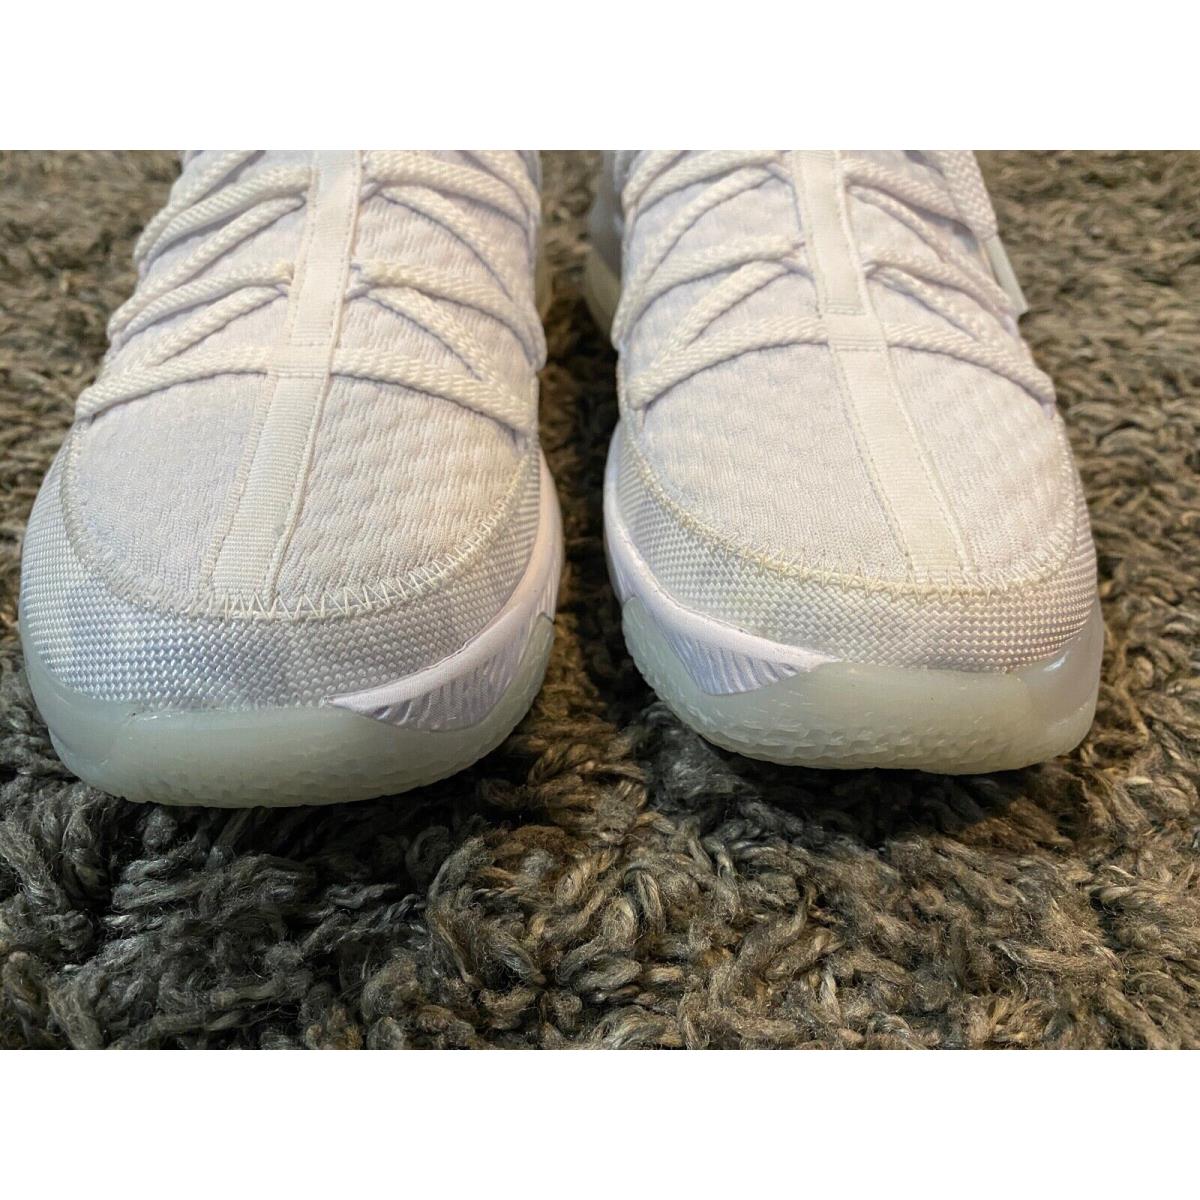 Nike shoes LeBron - White 6